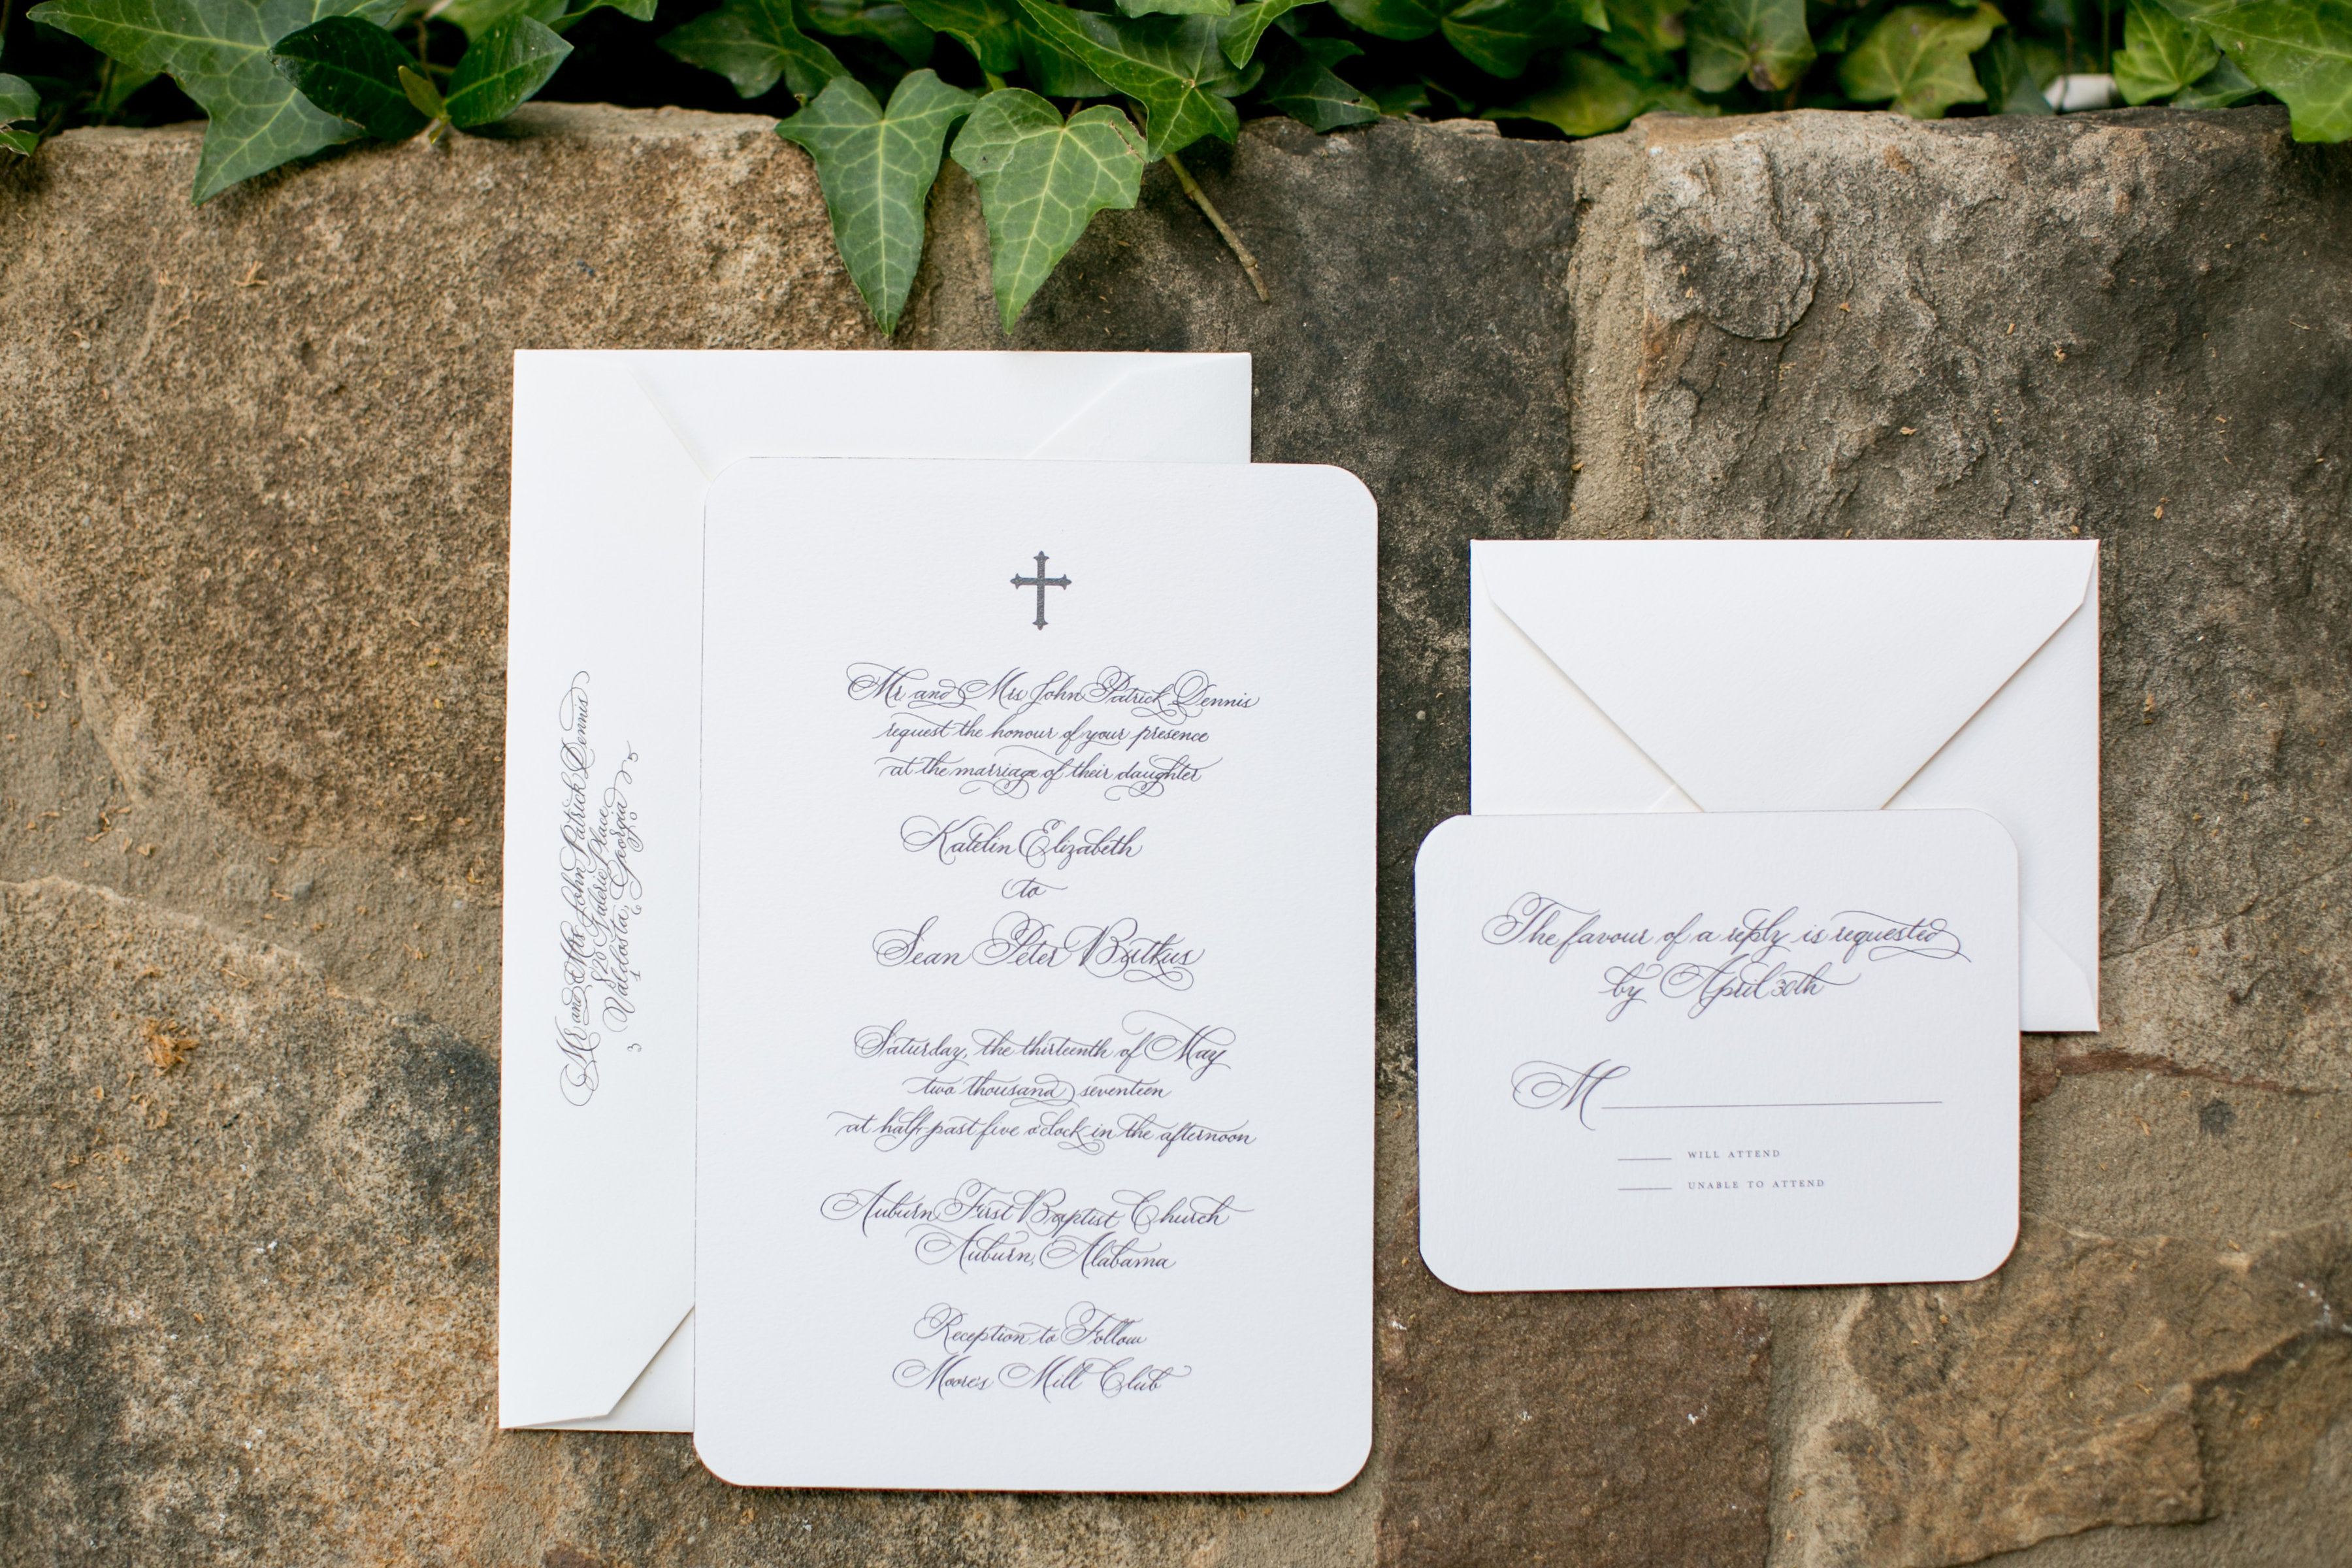 Auburn, Alabama wedding invitation design by Atlanta wedding calligrapher Ashlyn Carter - classic copperplate calligraphy font